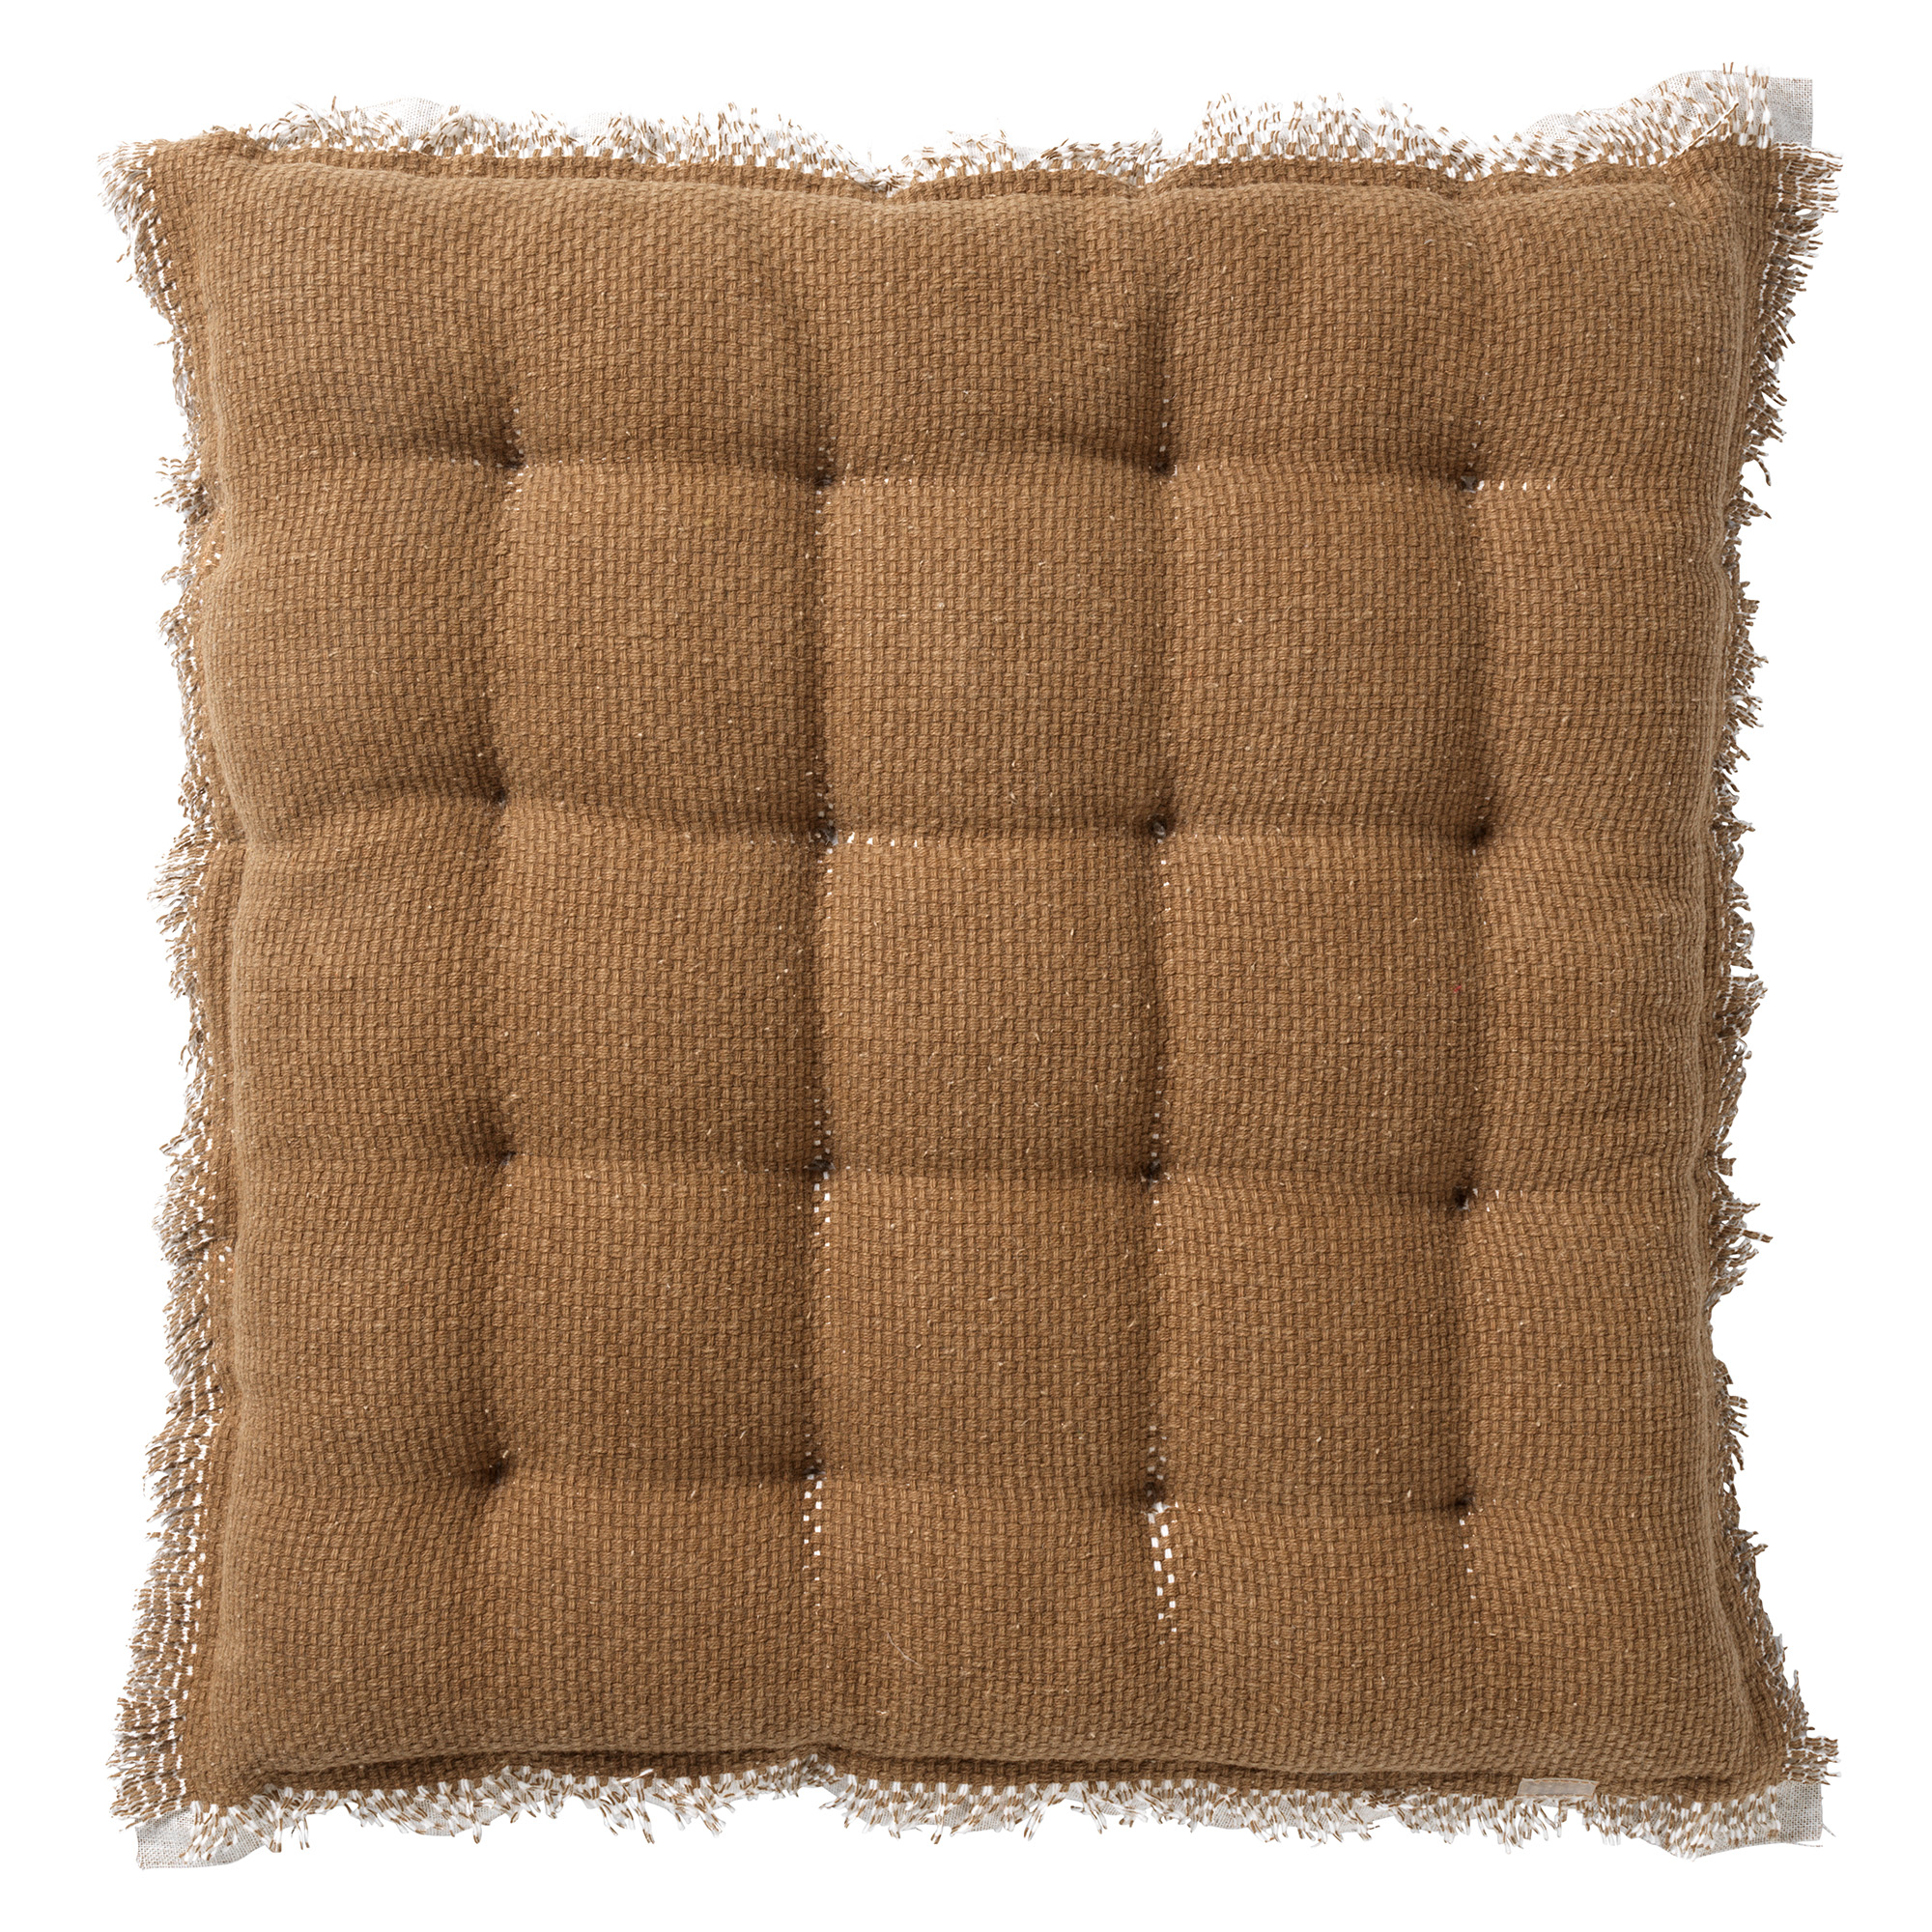 BURTO - Seat pad 40x40 cm Tobacco Brown - brown